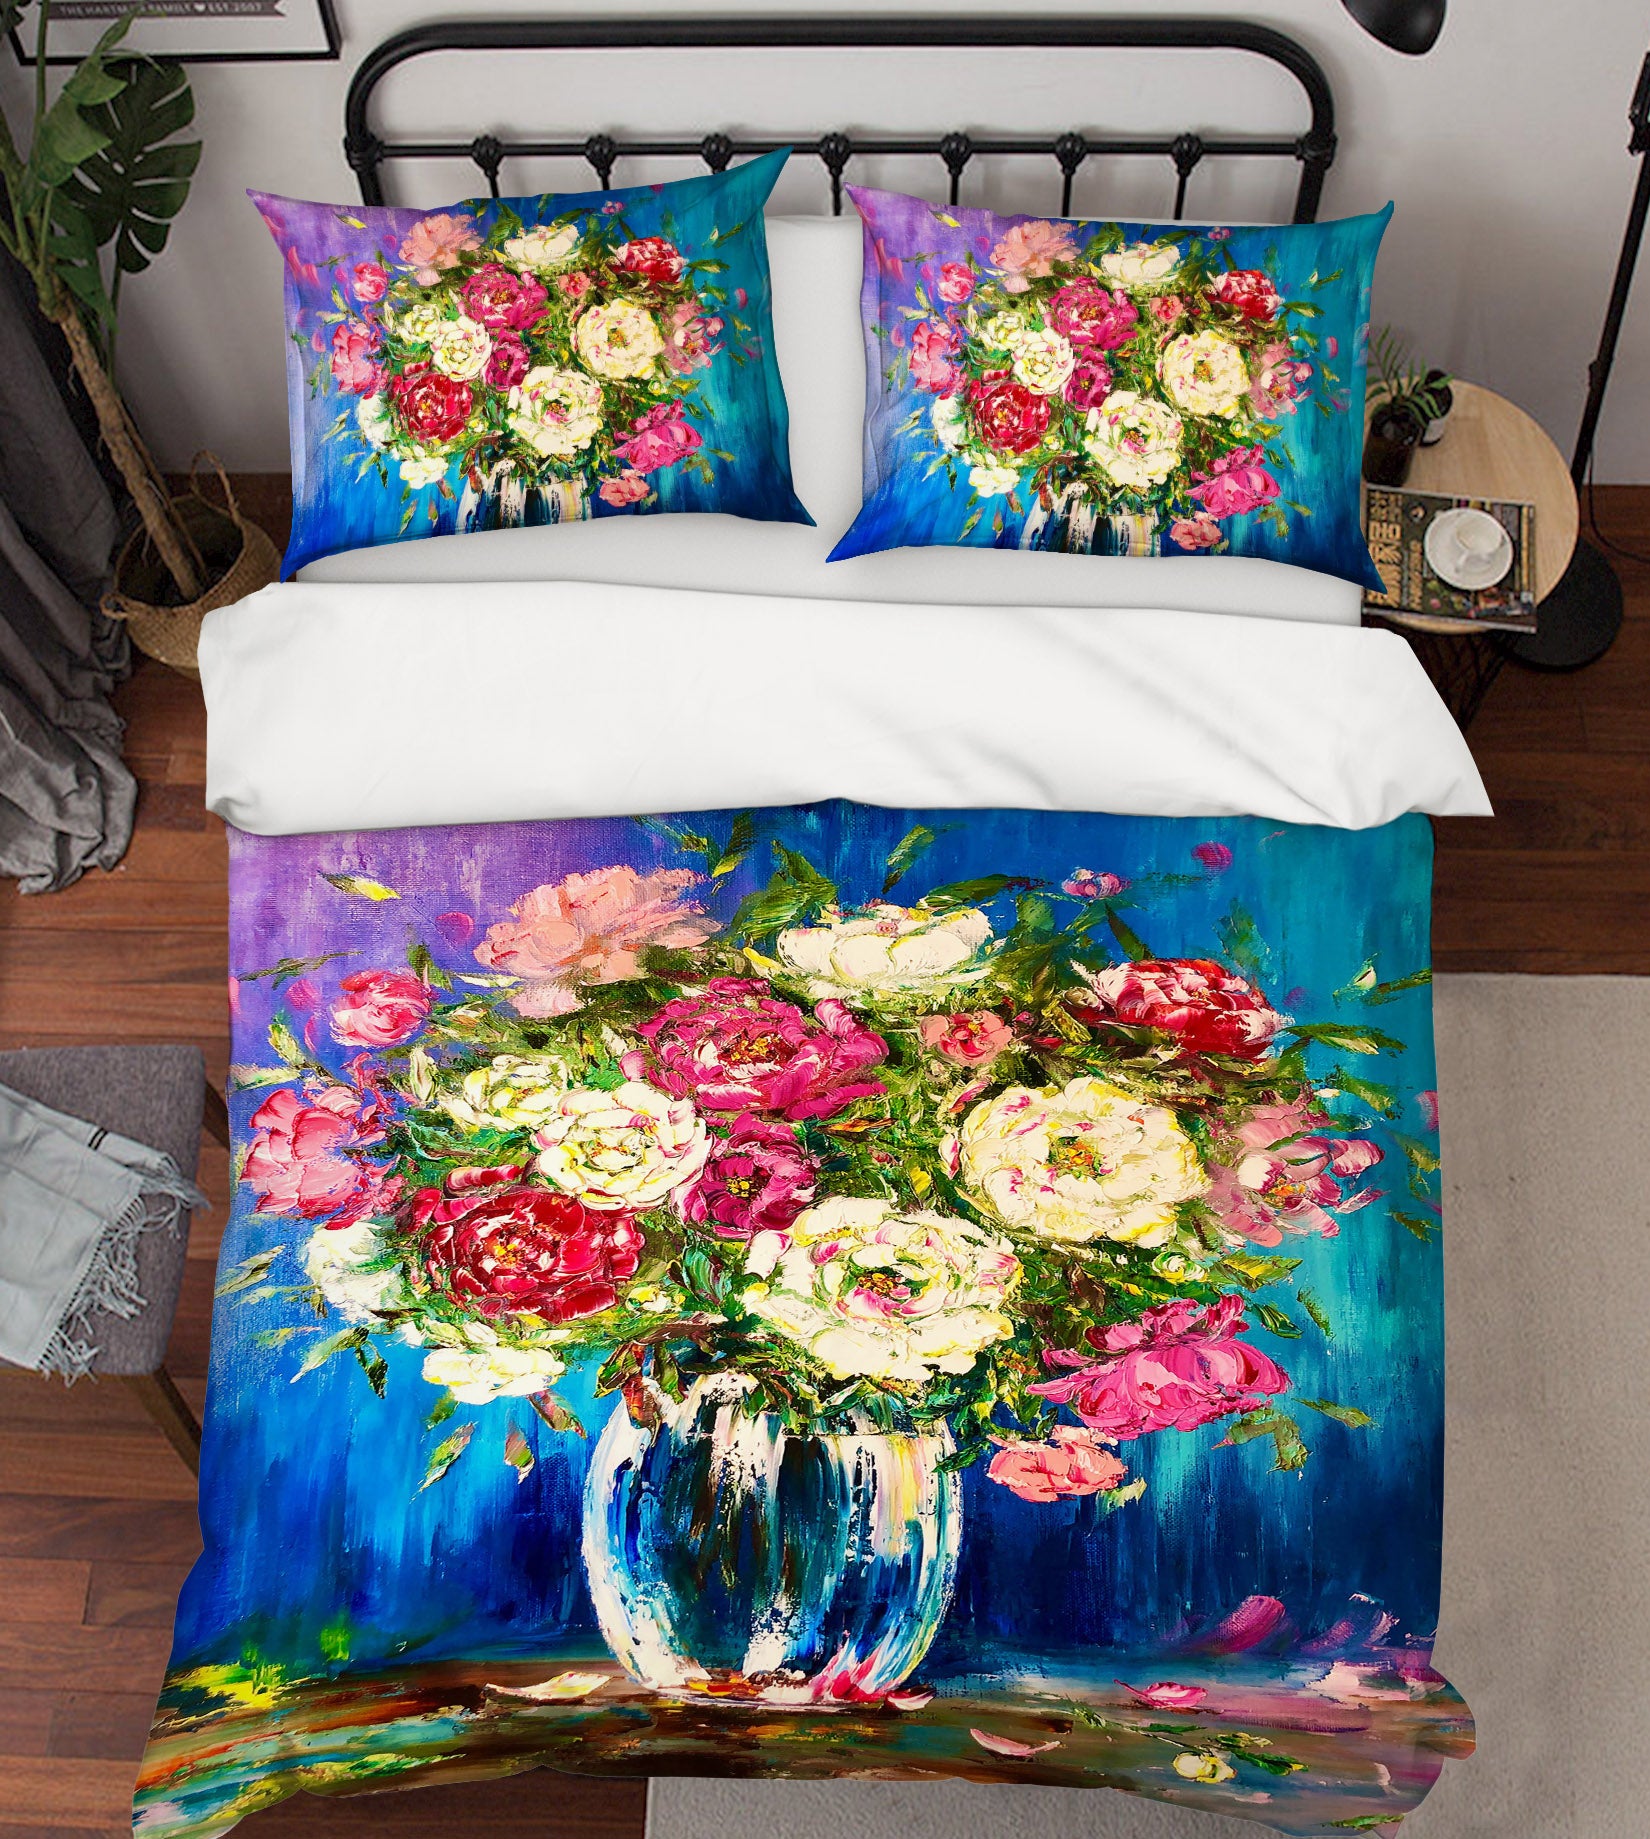 3D Colorful Flower Vase 572 Skromova Marina Bedding Bed Pillowcases Quilt